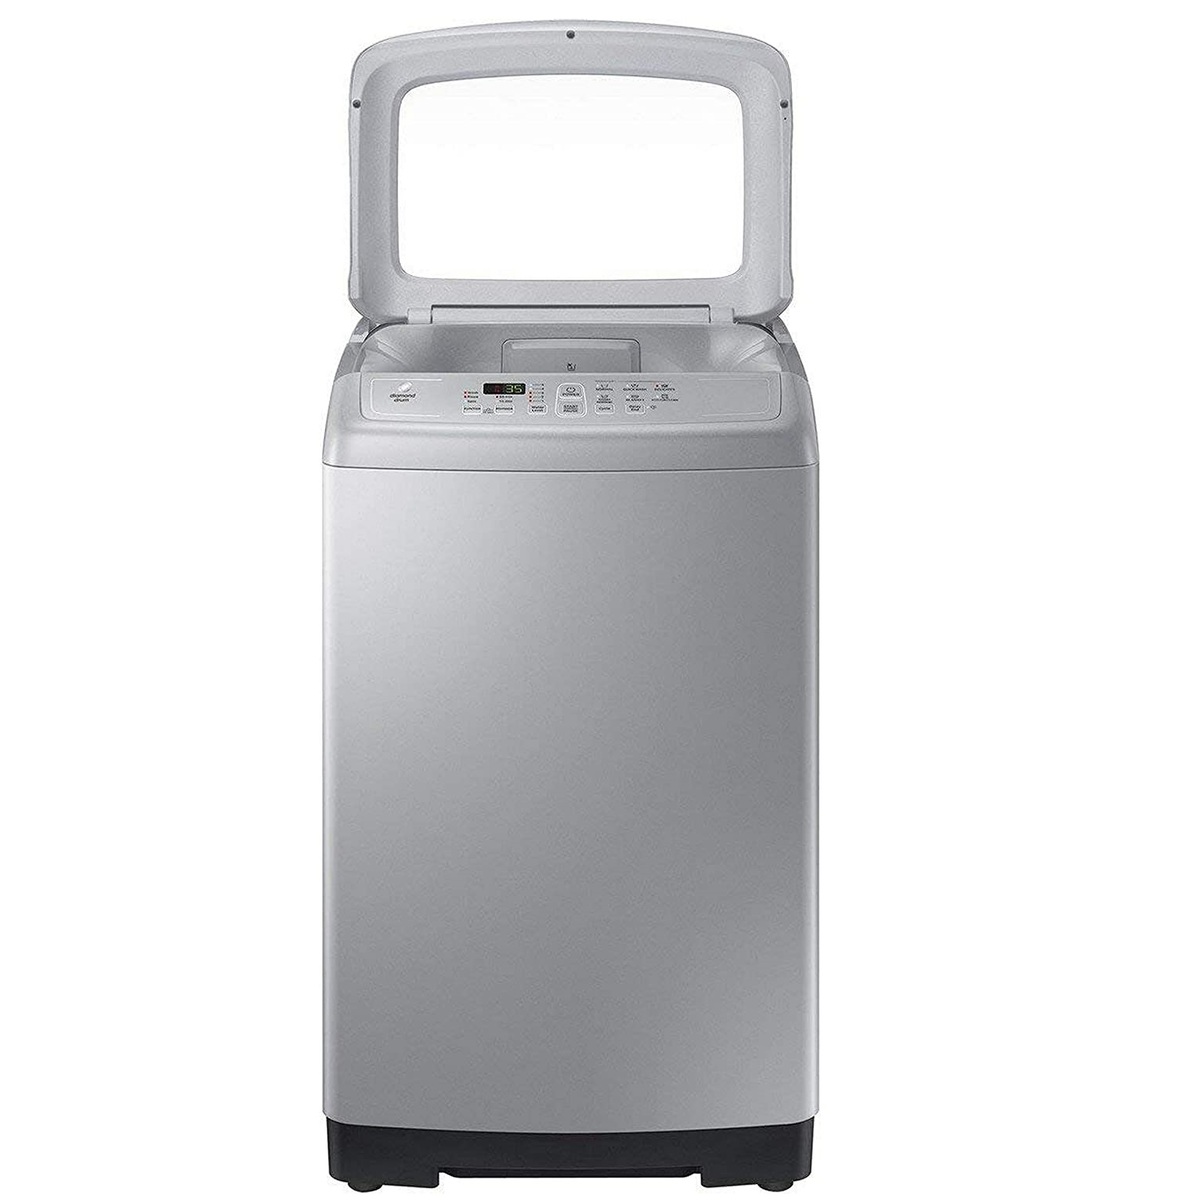 Samsung Fully Automatic Washing Machine TL WA60M4100HY 6Kg